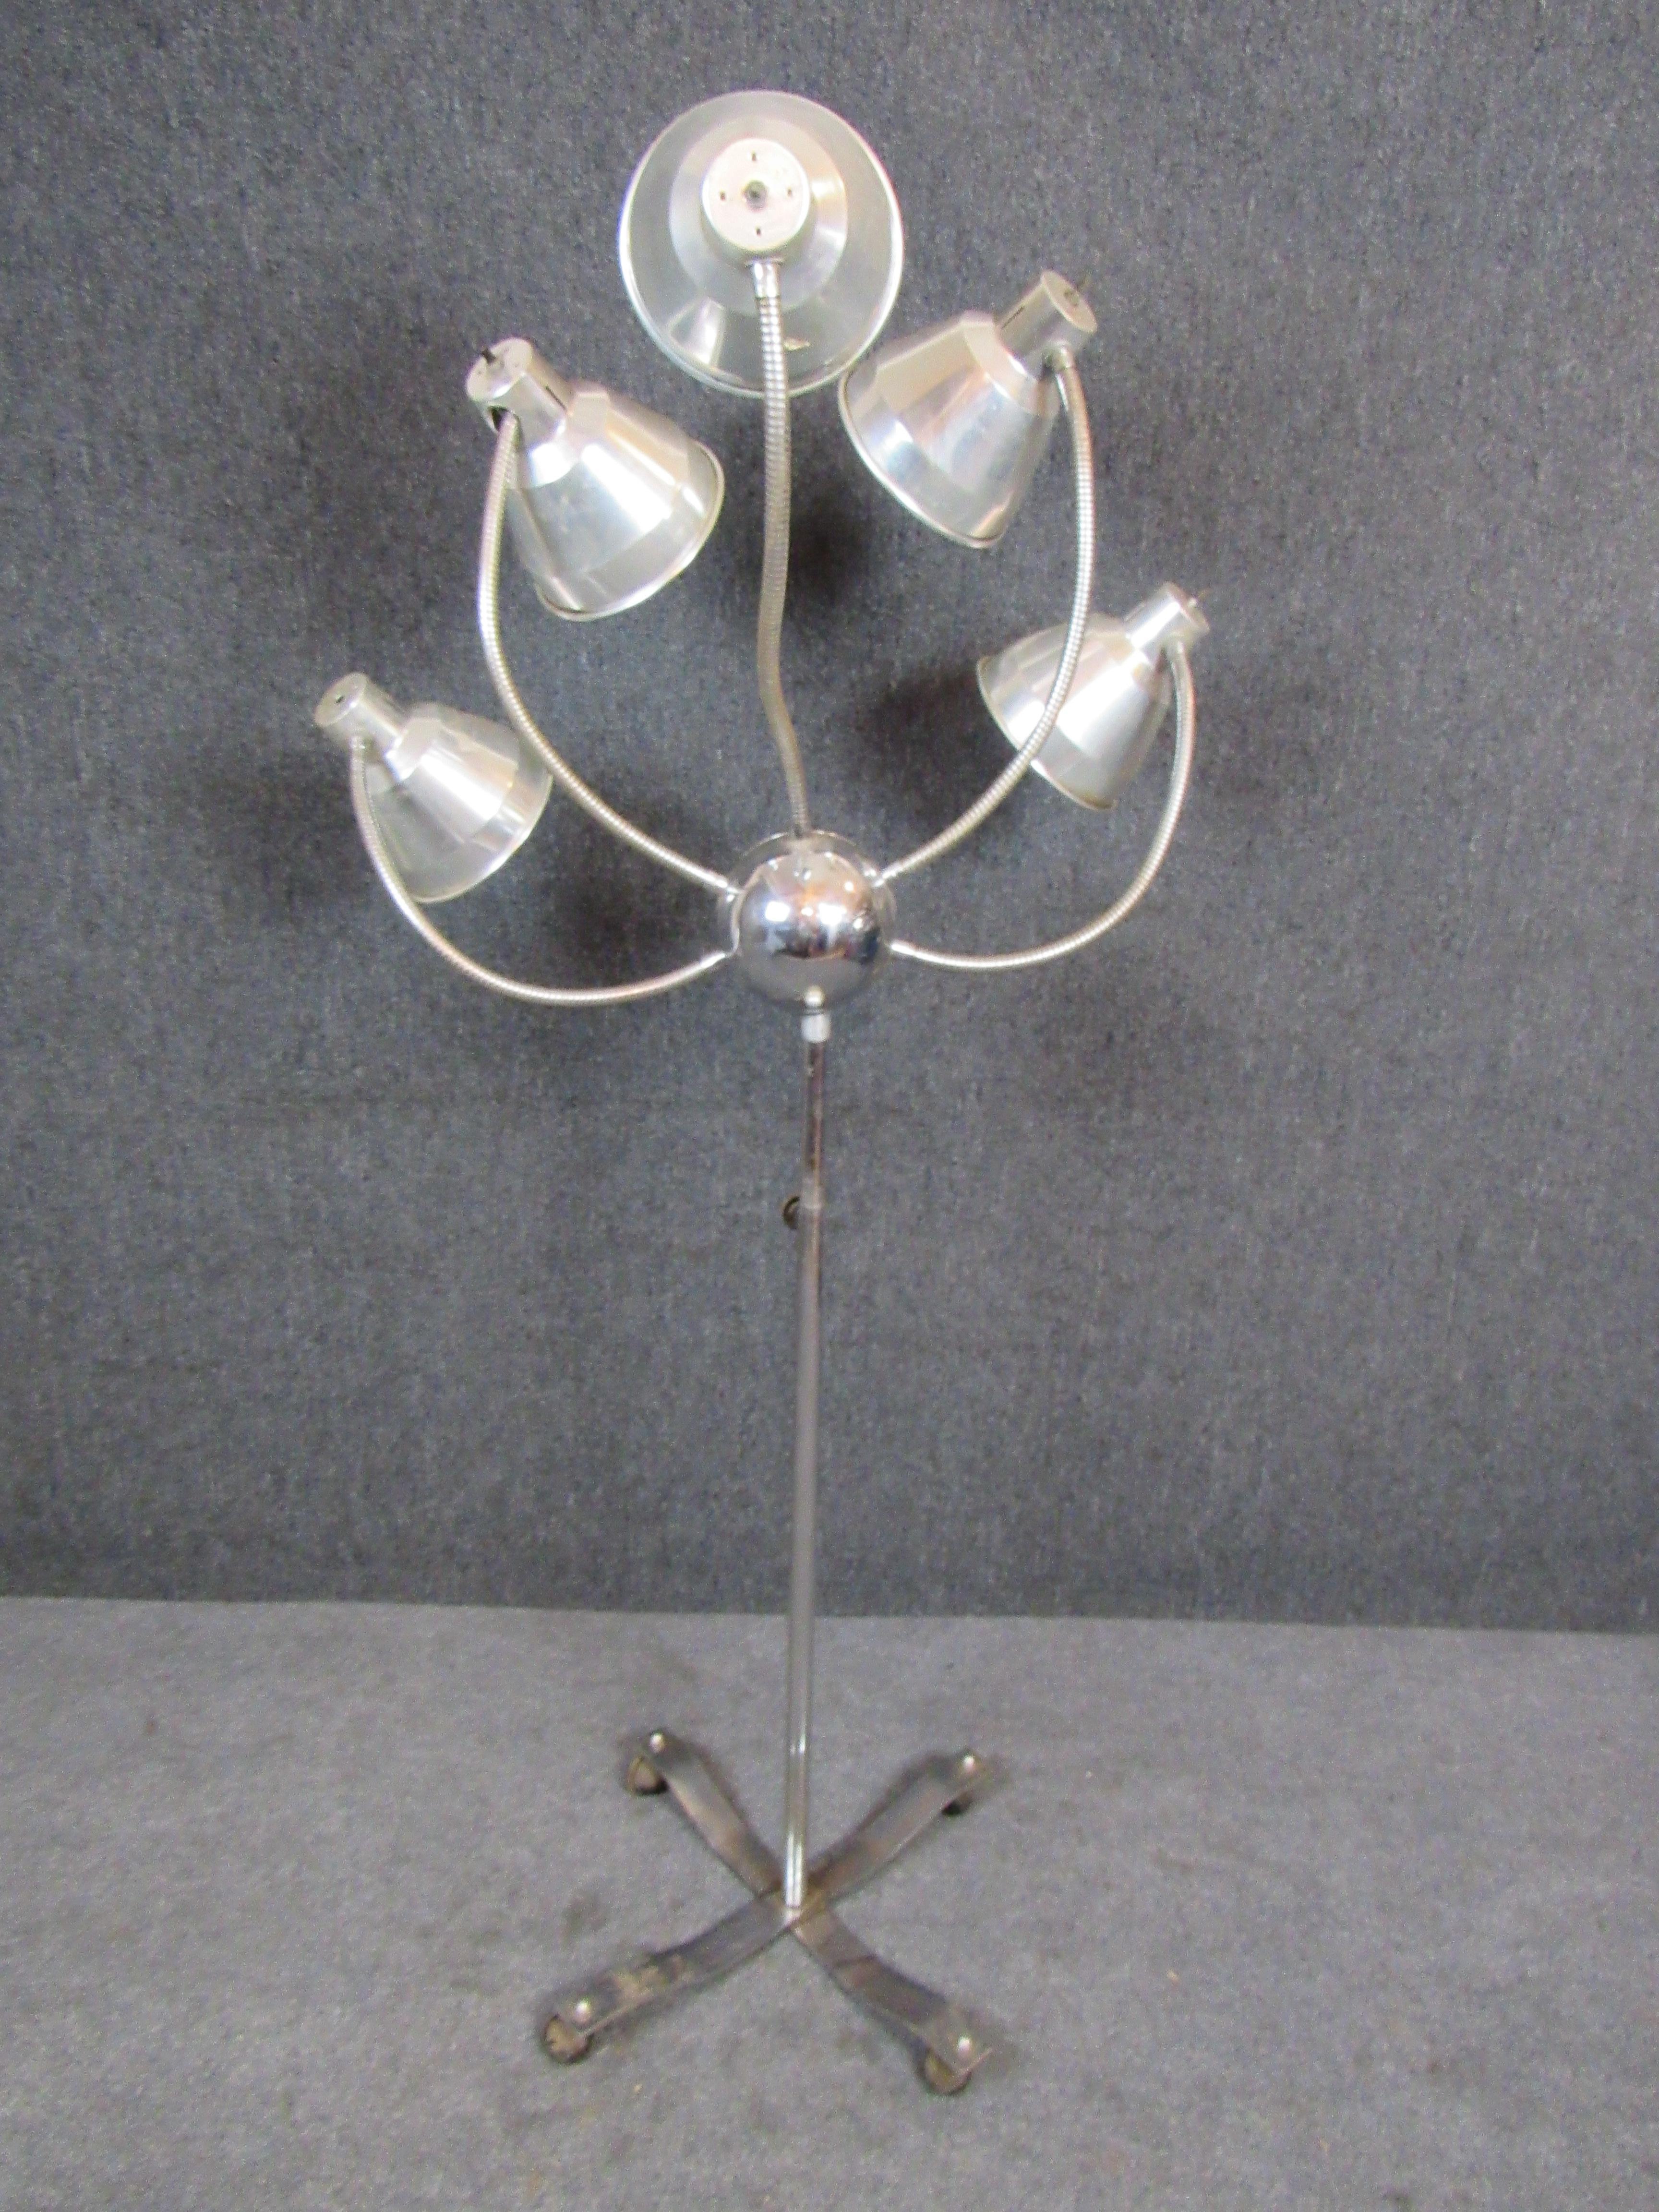 Funky Five-Headed Gooseneck Lamp (lampe à col de cygne à cinq têtes) État moyen à Brooklyn, NY